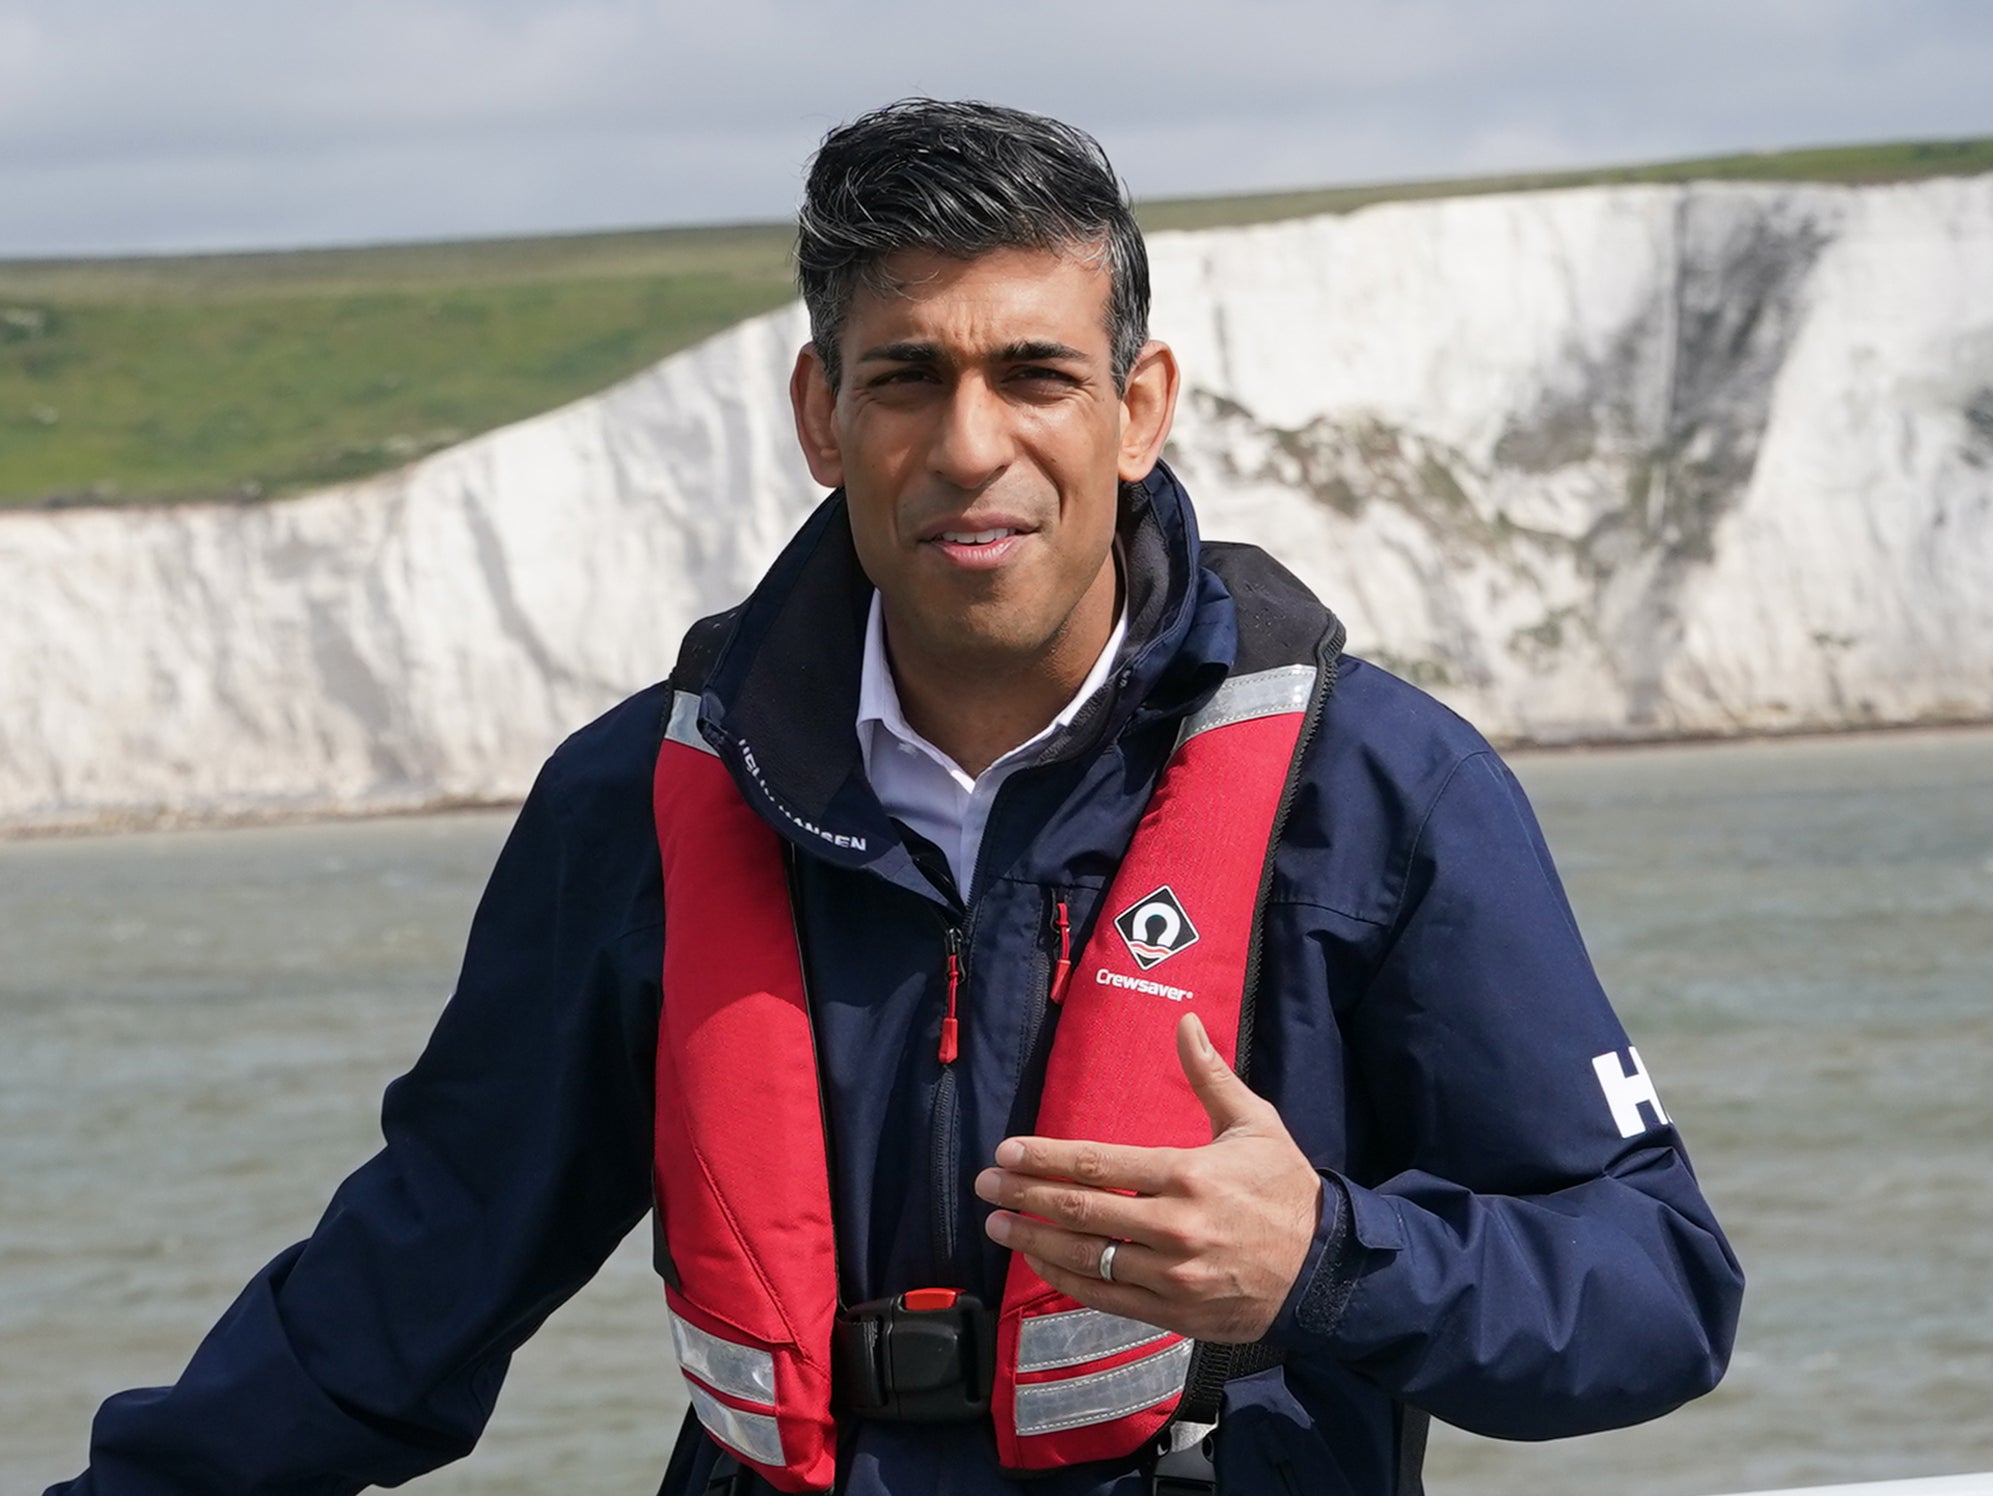 Rishi Sunak onboard Border Agency cutter HMC Seeker during a visit to Dover